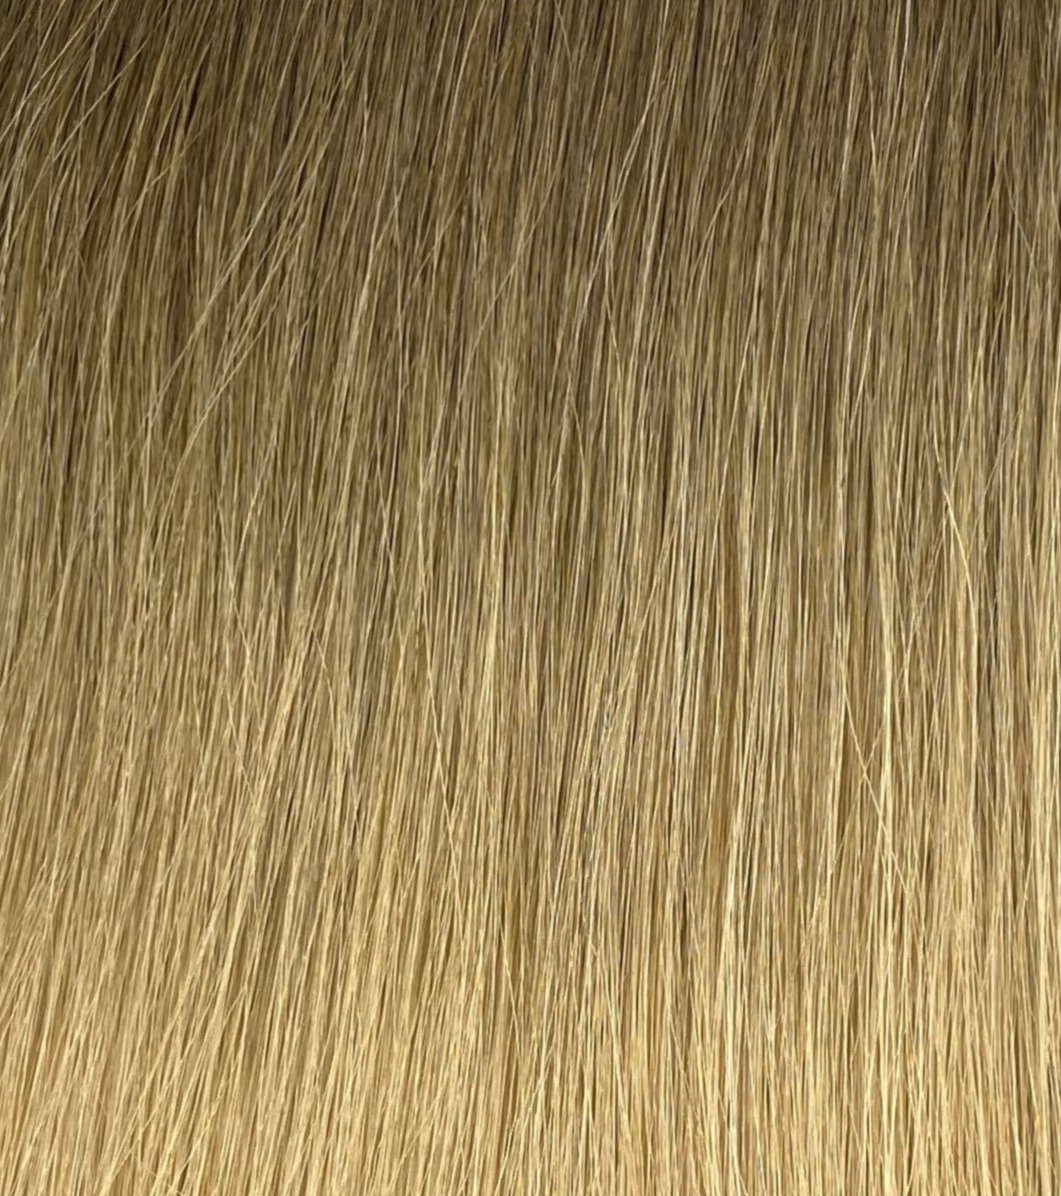 Double Weft Ombre #8 & DB4 - 24 Inches - Dark Blonde into Dark Golden Blonde - 70 Grams